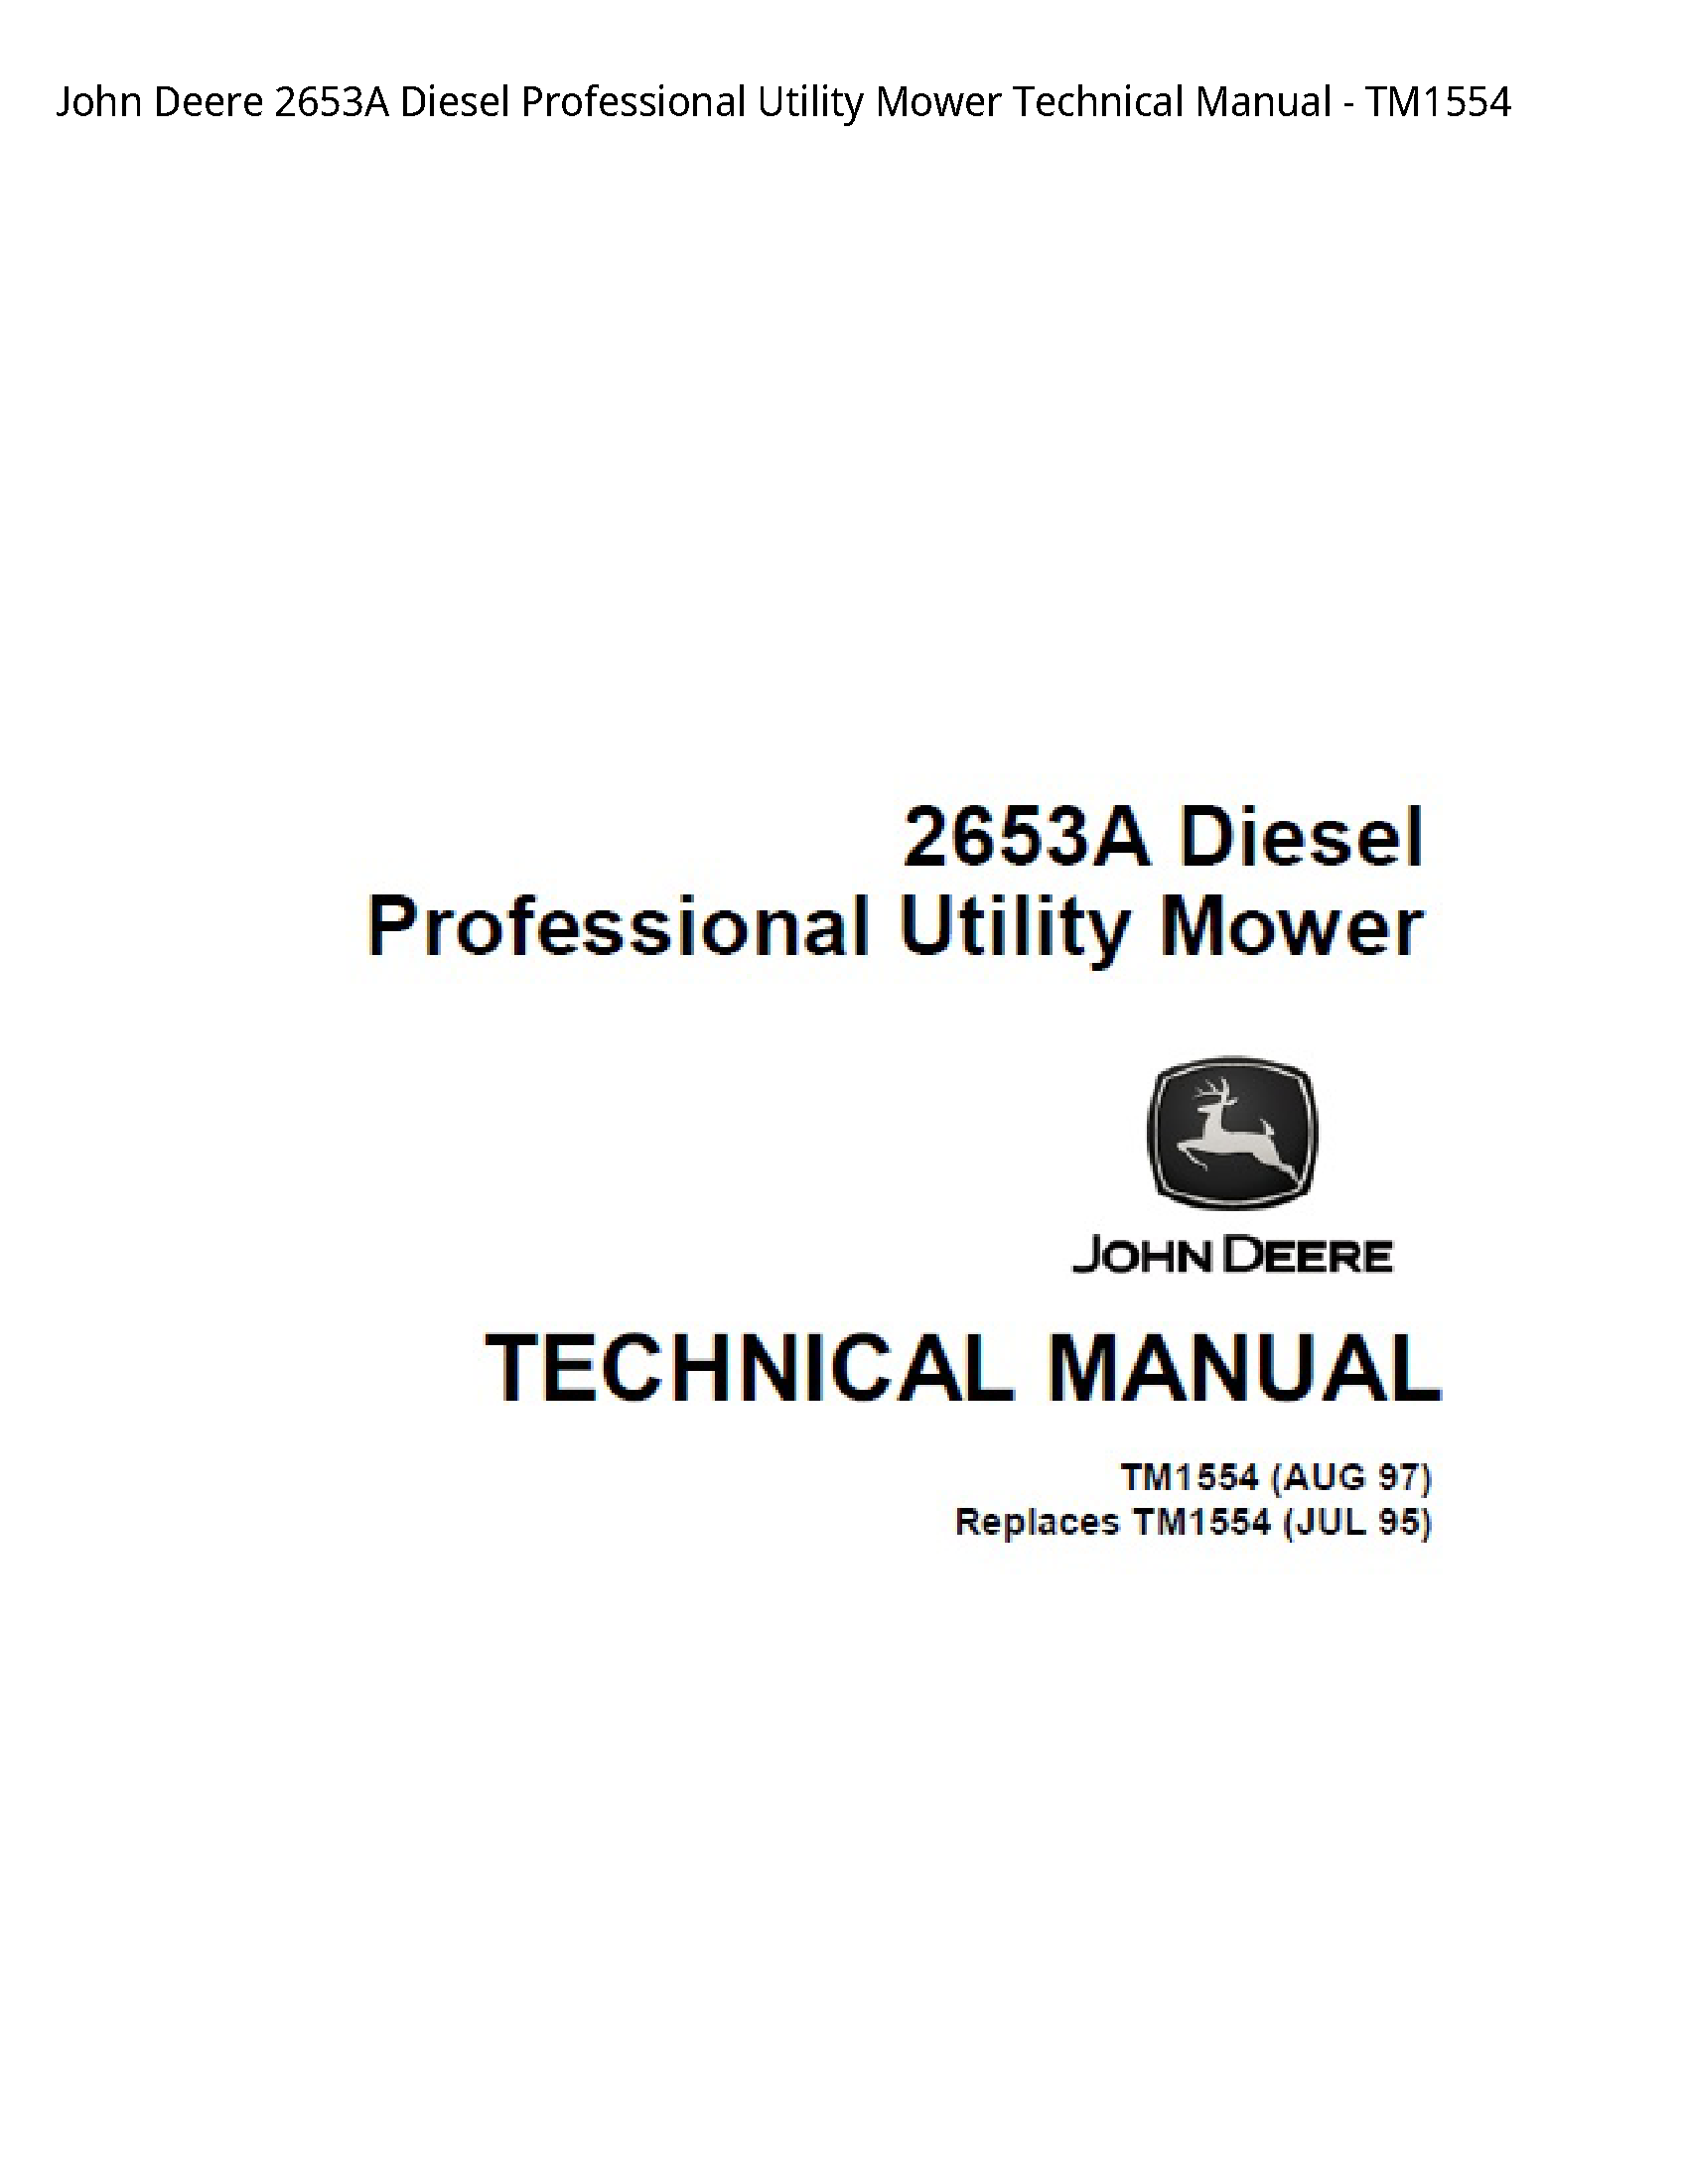 John Deere 2653A Diesel Professional Utility Mower Technical manual